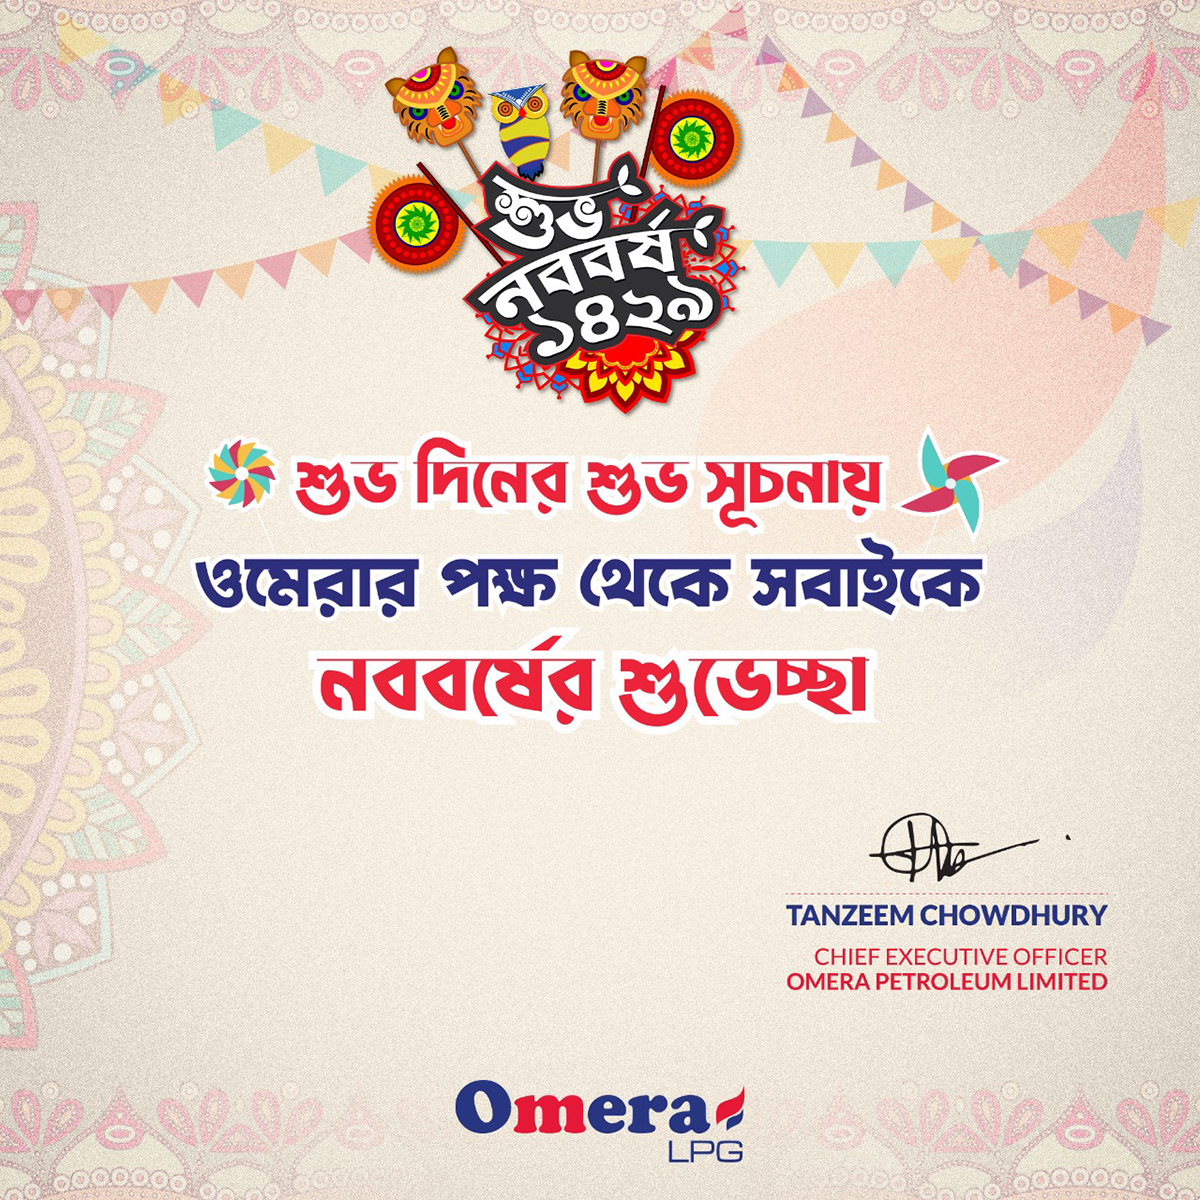 bangla new year design Pohela Boishakh নববর্ষ পহেলা বৈশাখ বাংলা নববর্ষ শুভ নববর্ষ